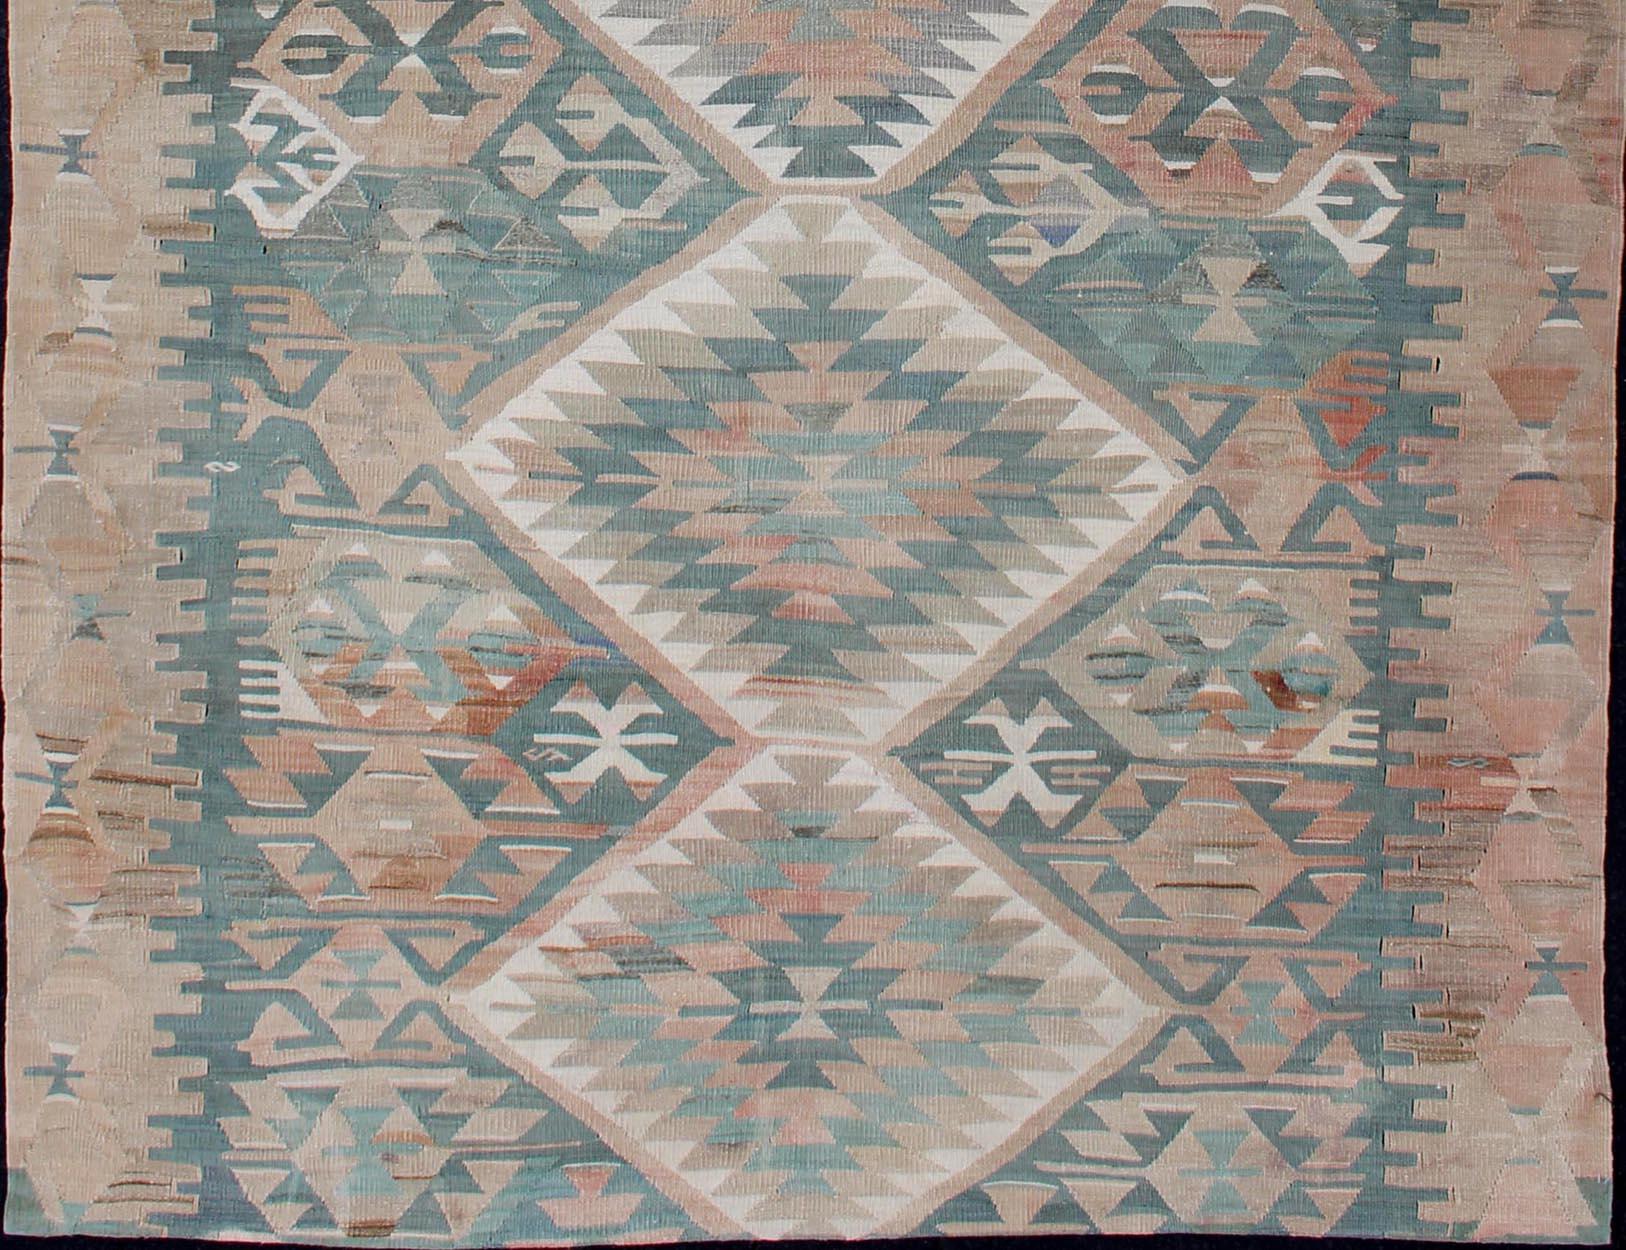 Kilim Geometric Design Vintage Turkish Tribal Flat-Weave Rug in Teal and Neutrals For Sale